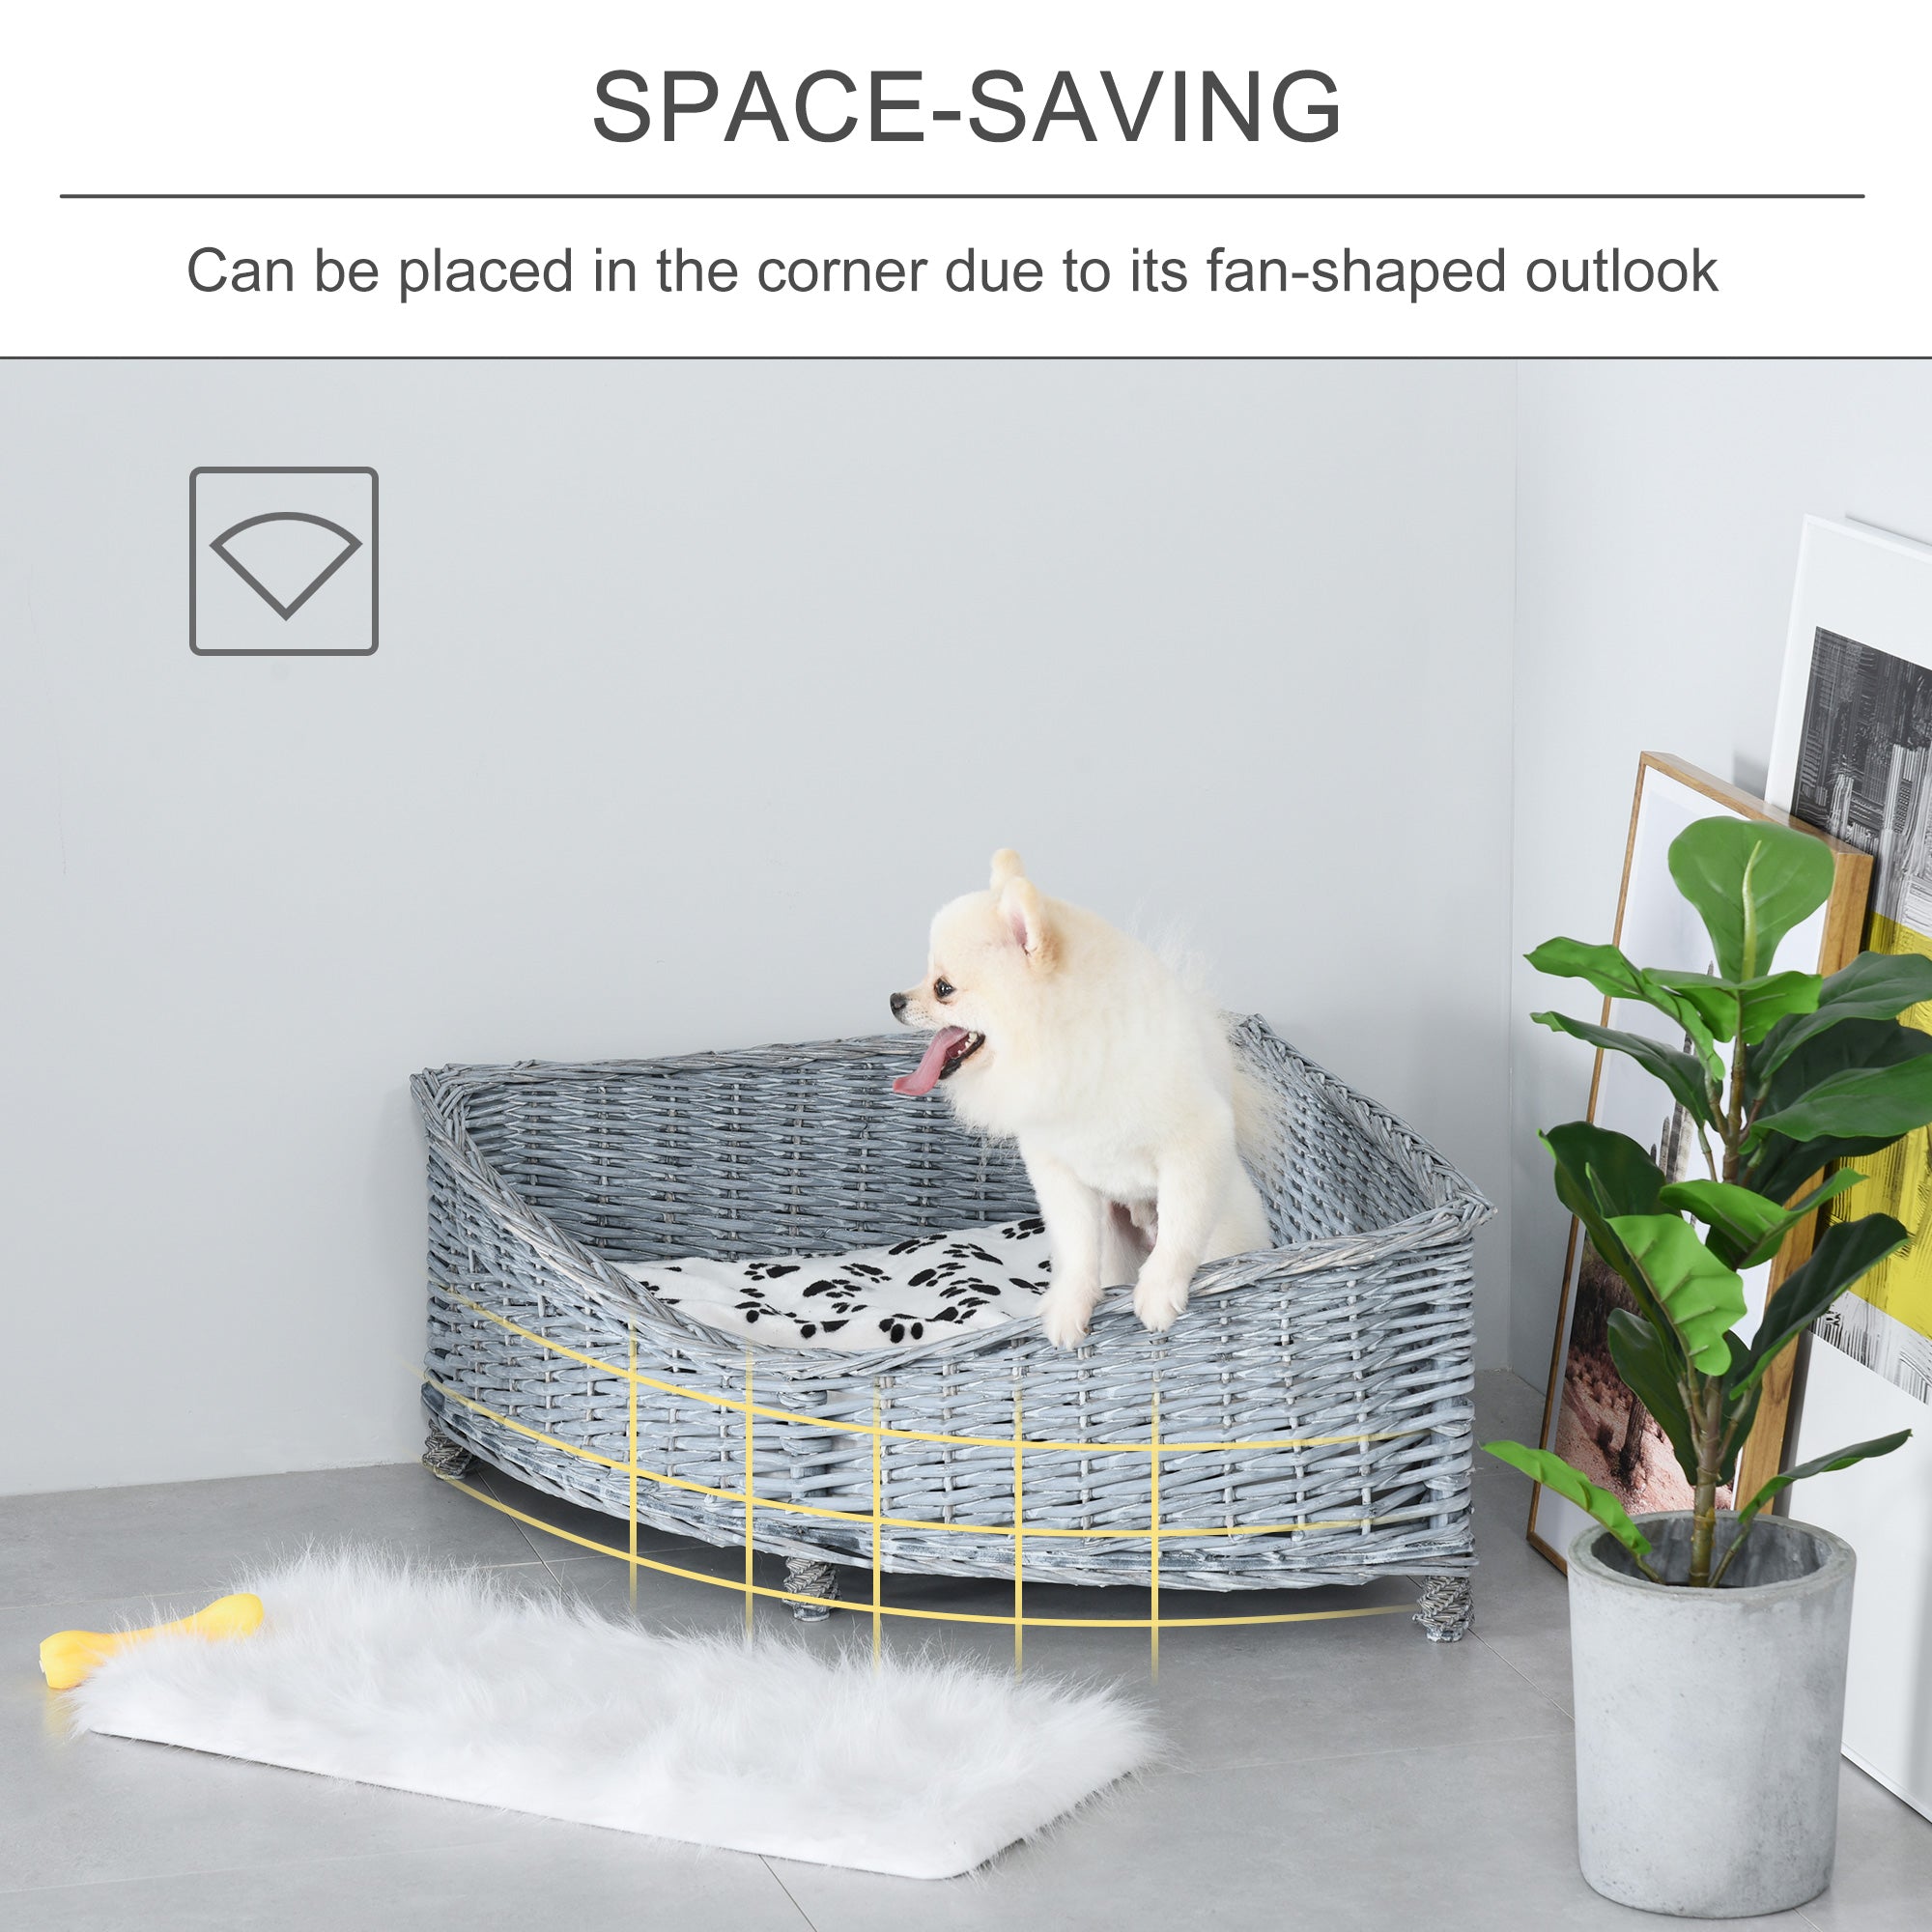 Wicker Dog Corner Basket Pet Bed Sofa Couch w/ Soft Plush Cushion Elevated Base